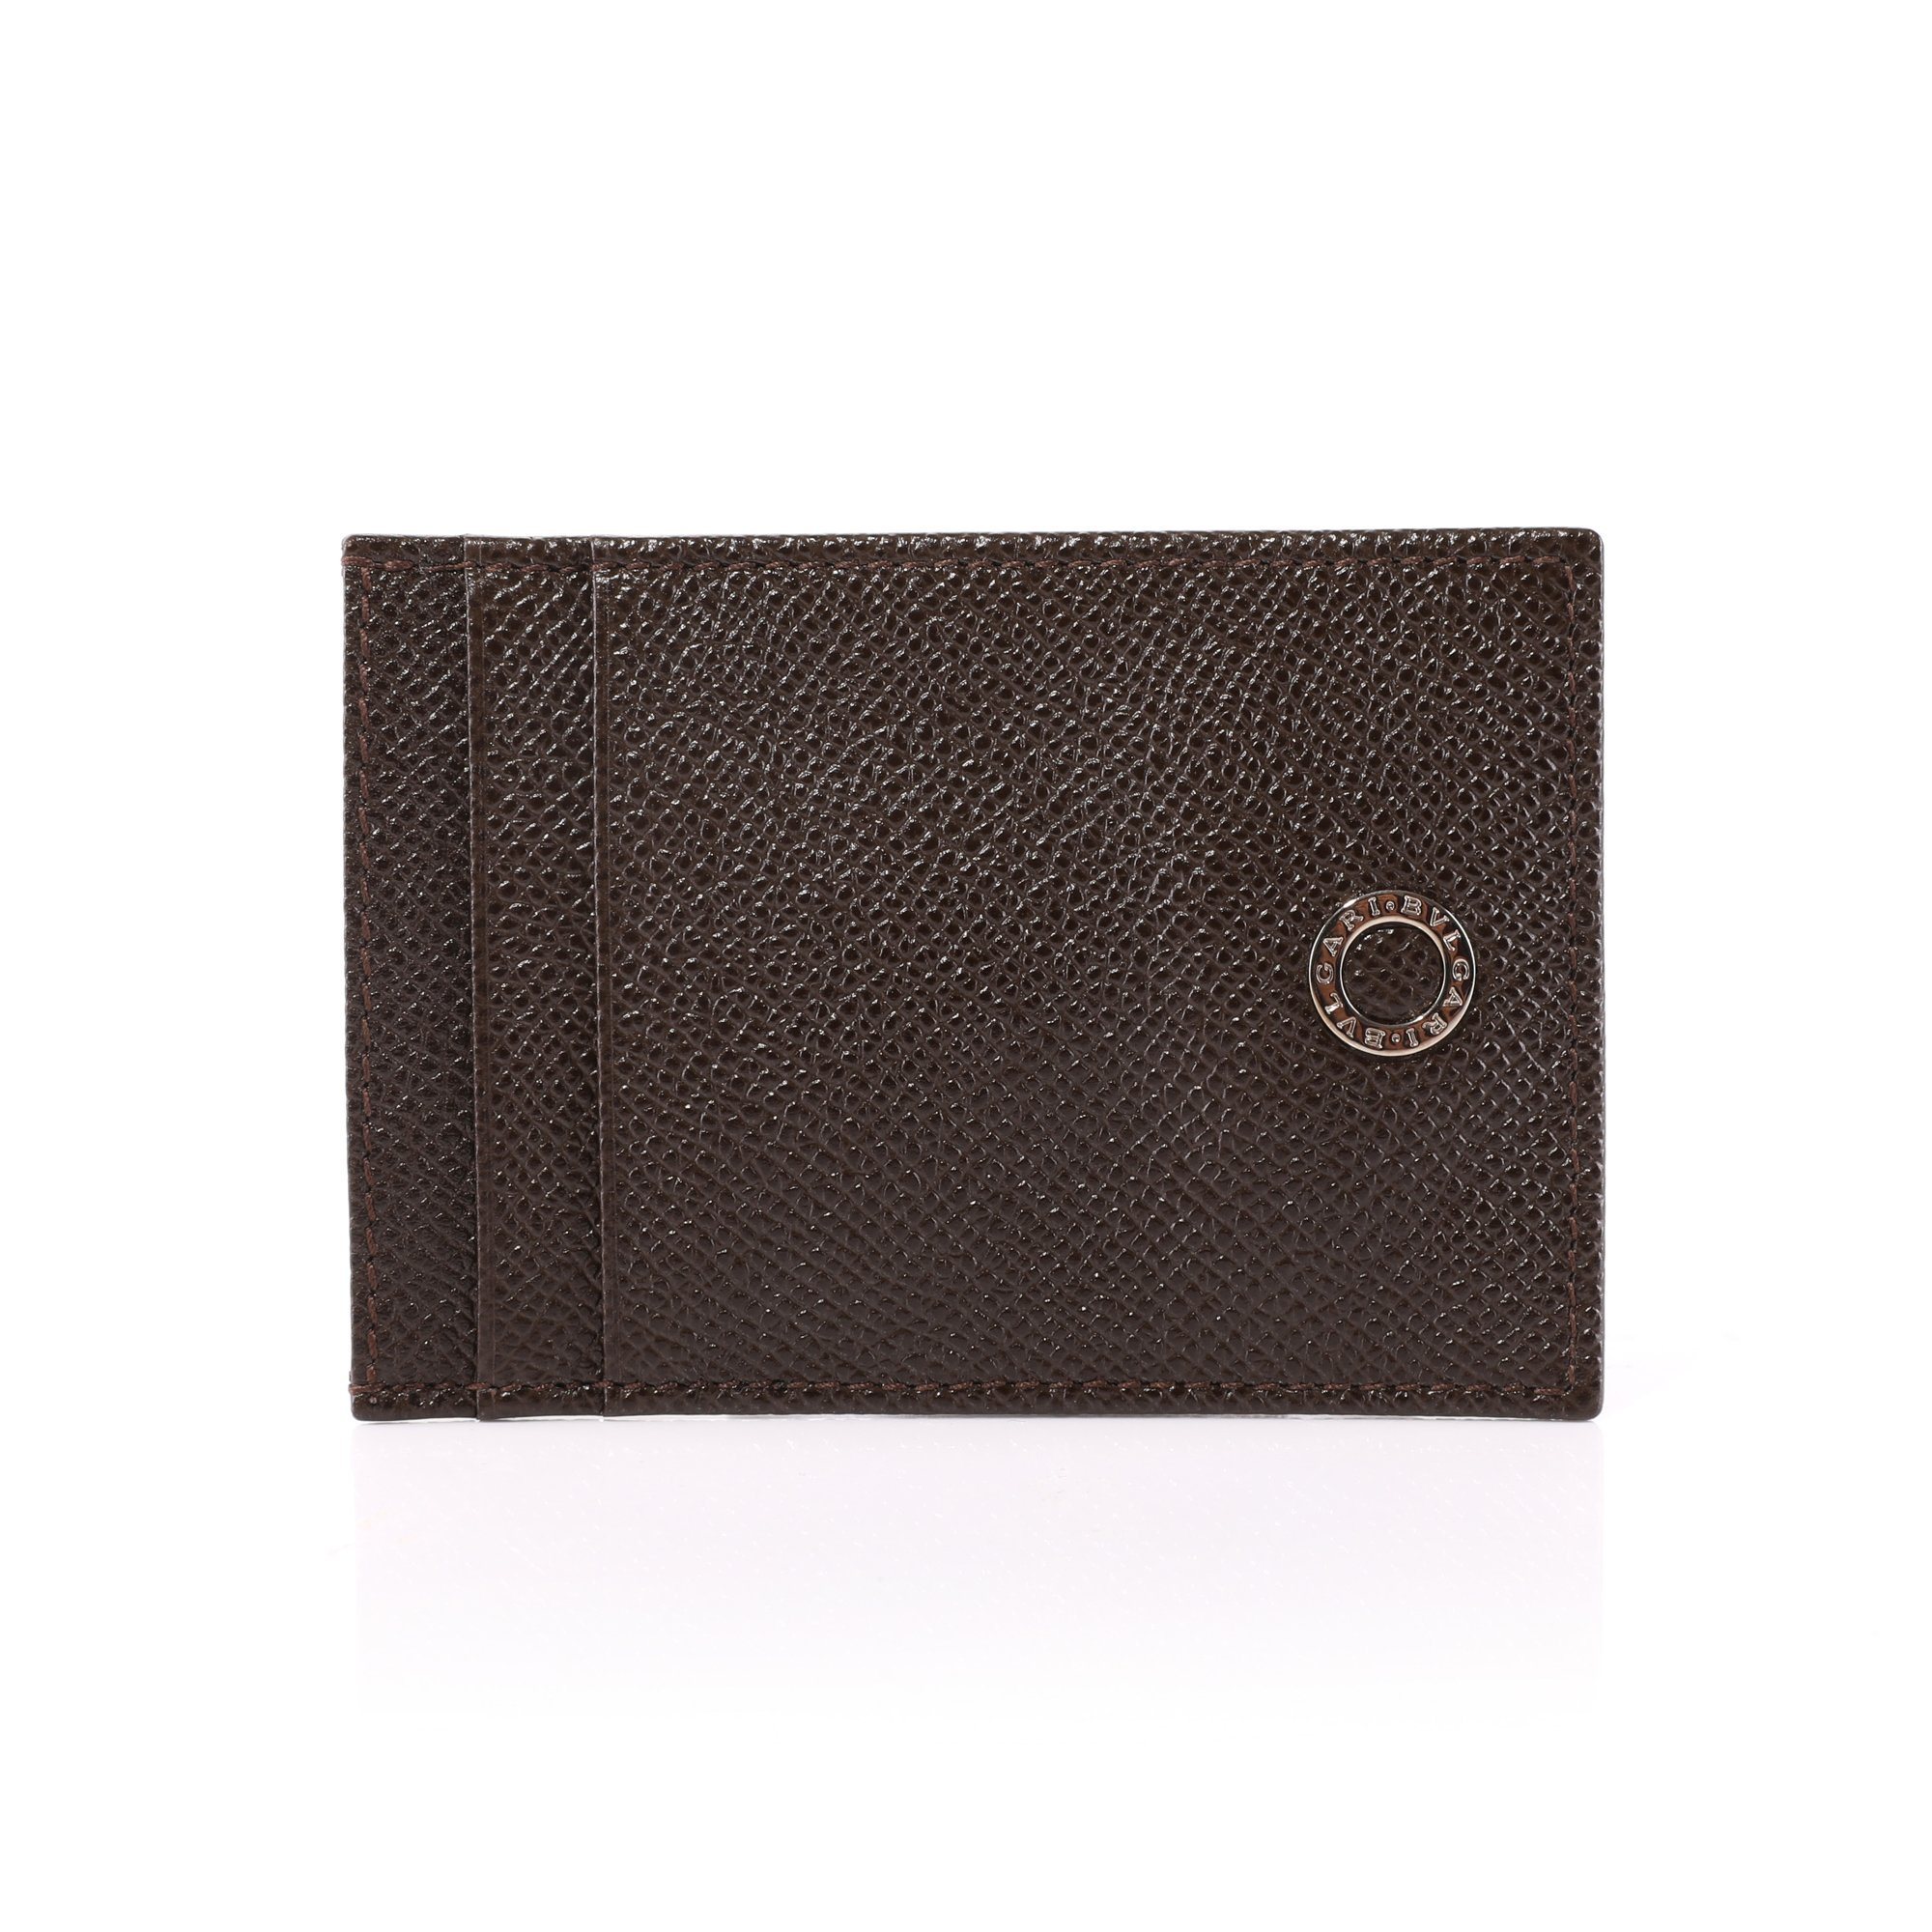 Bvlgari Brown Leather Card Holder